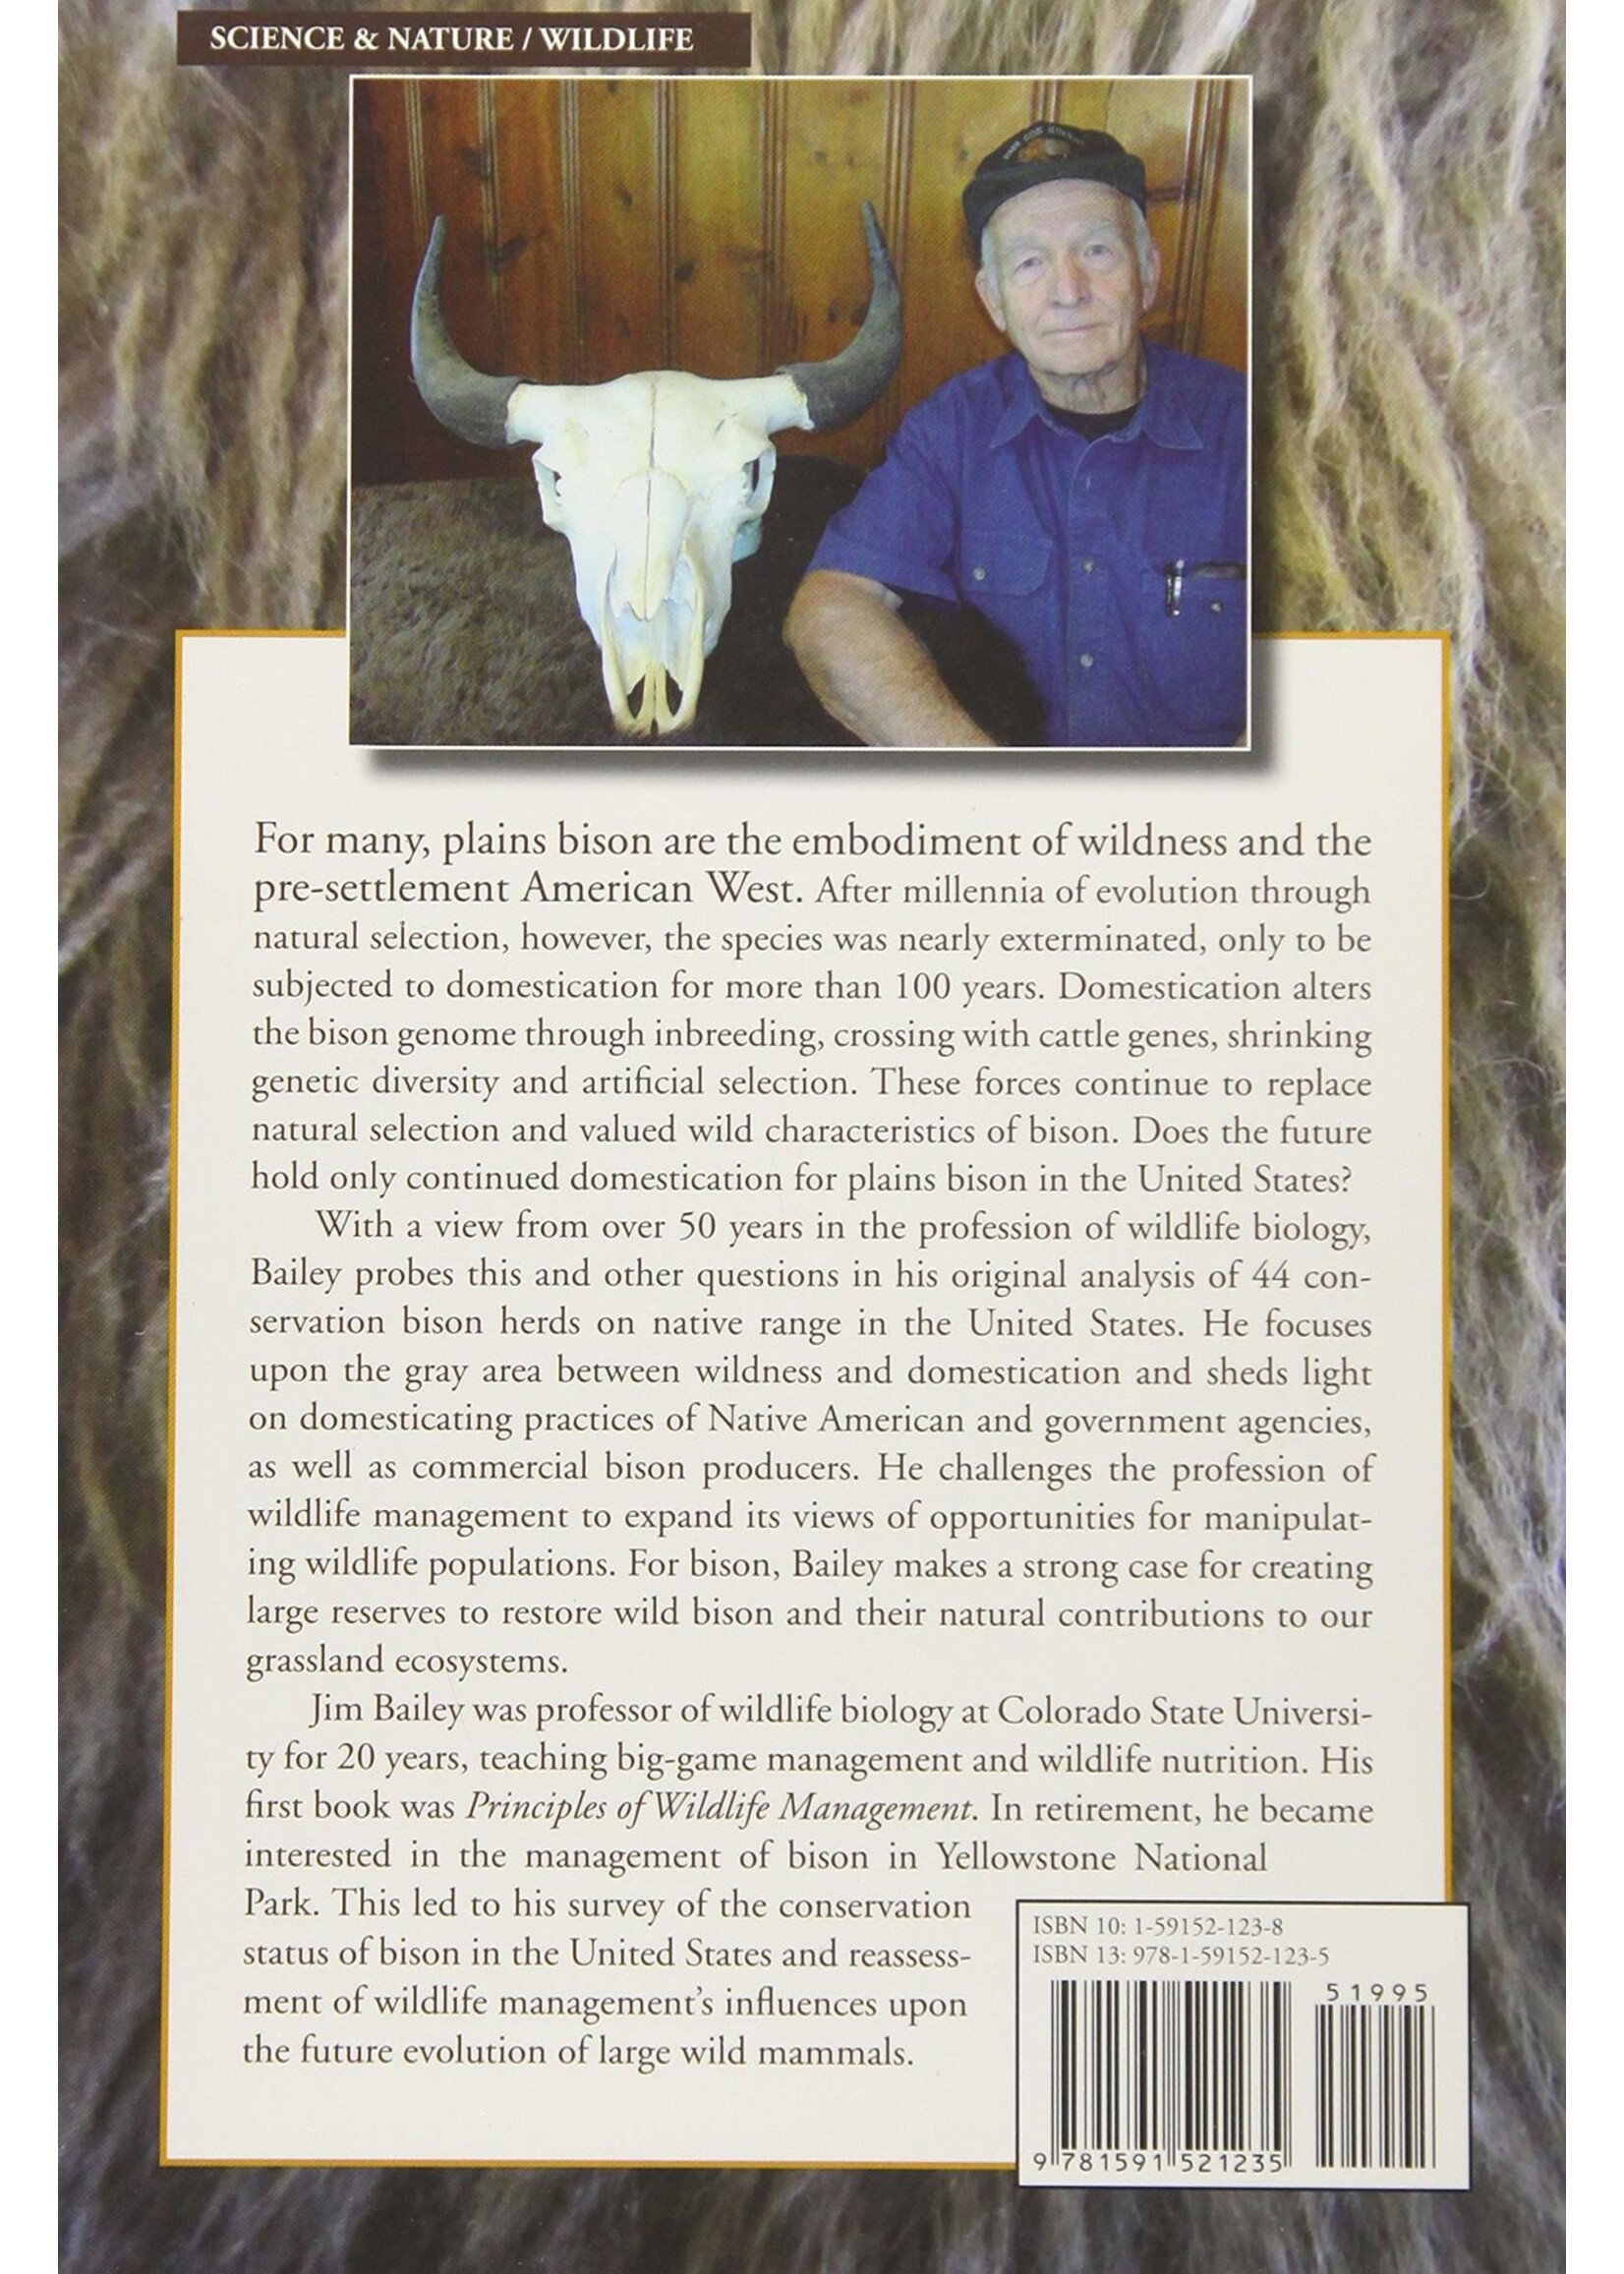 American Plains Bison: Rewilding an Icon